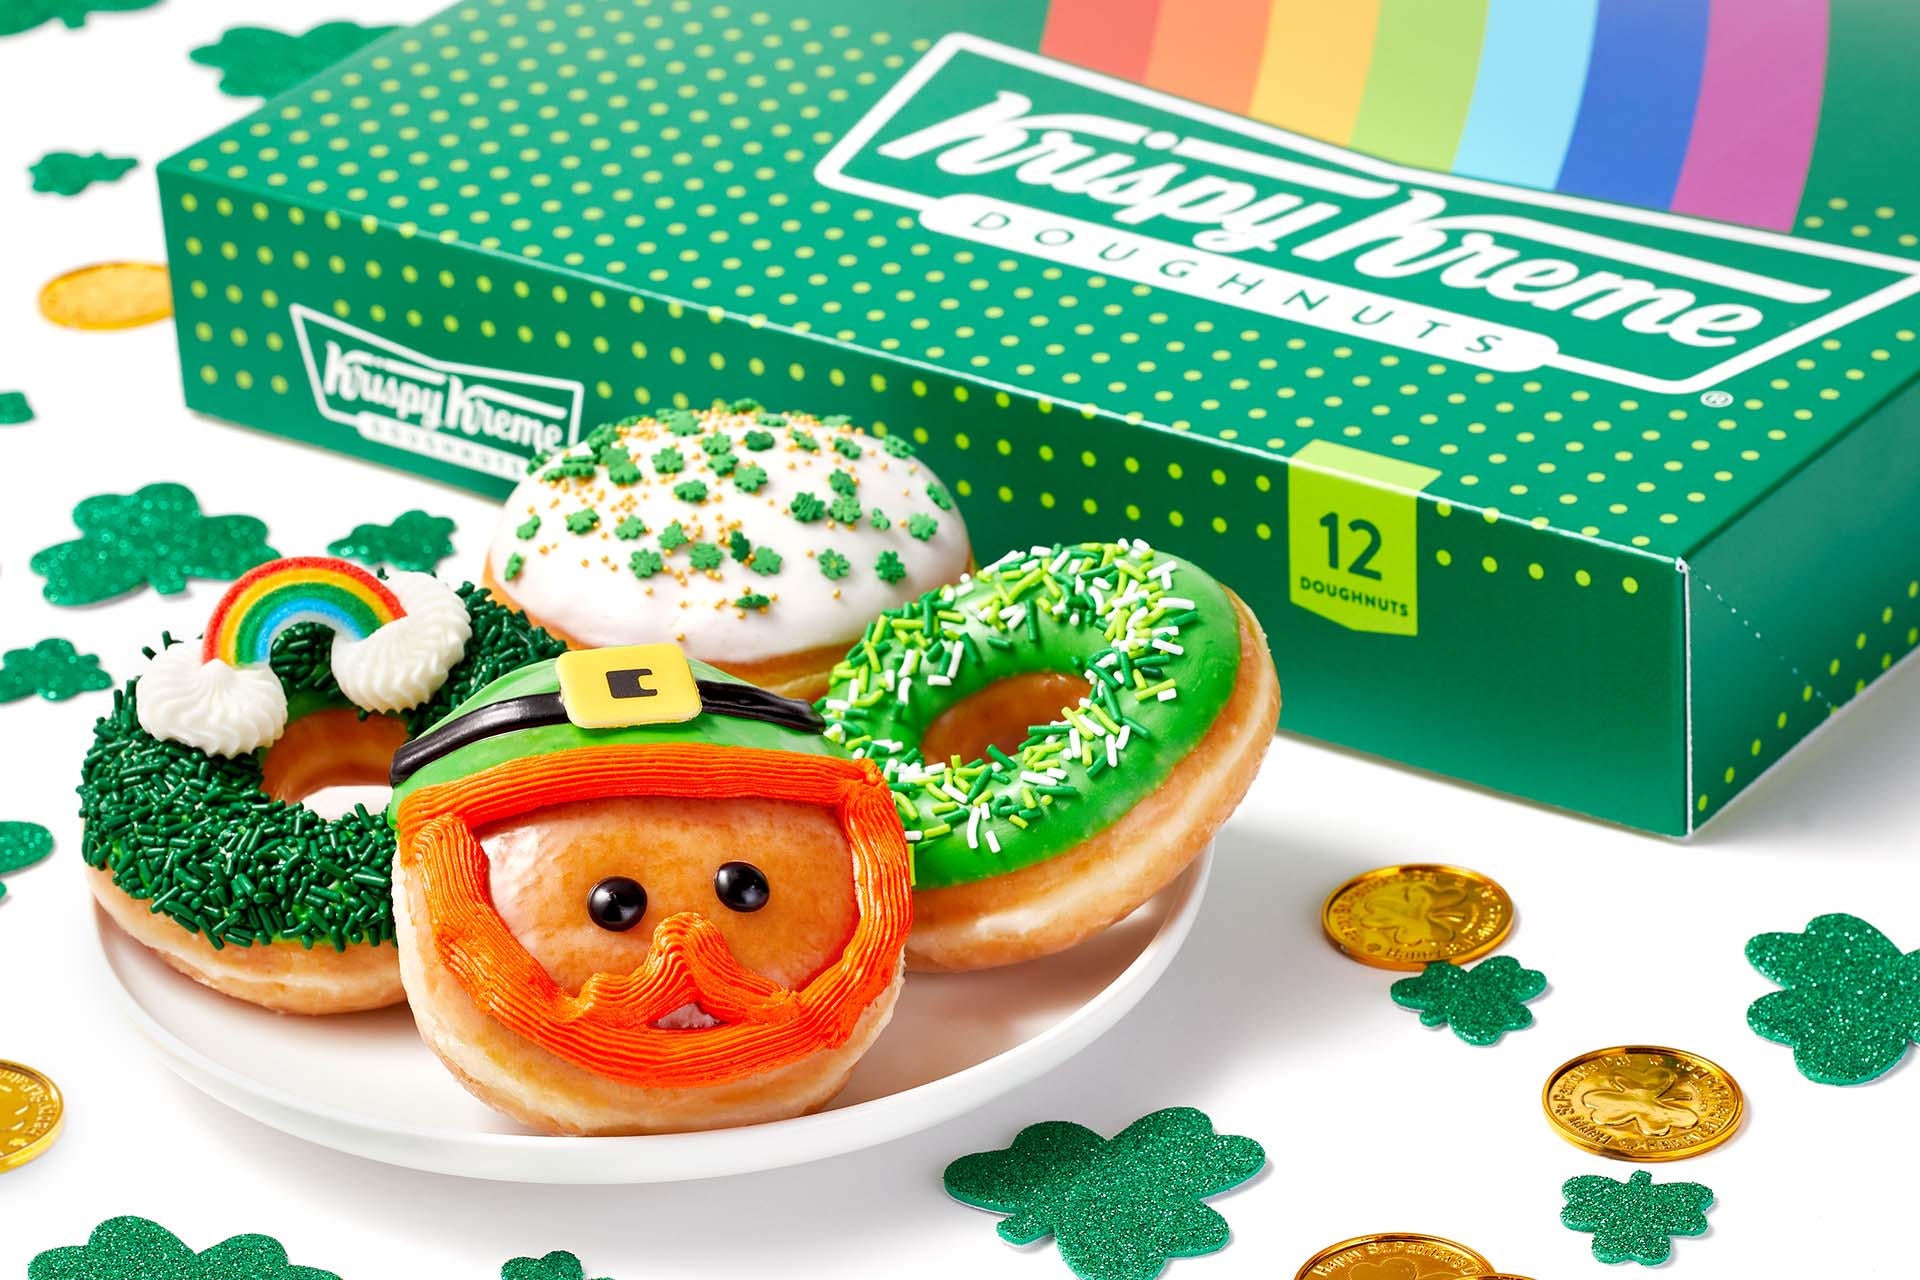 Krispy Kreme Introduces 4 New Doughnuts for St. Patrick's Day